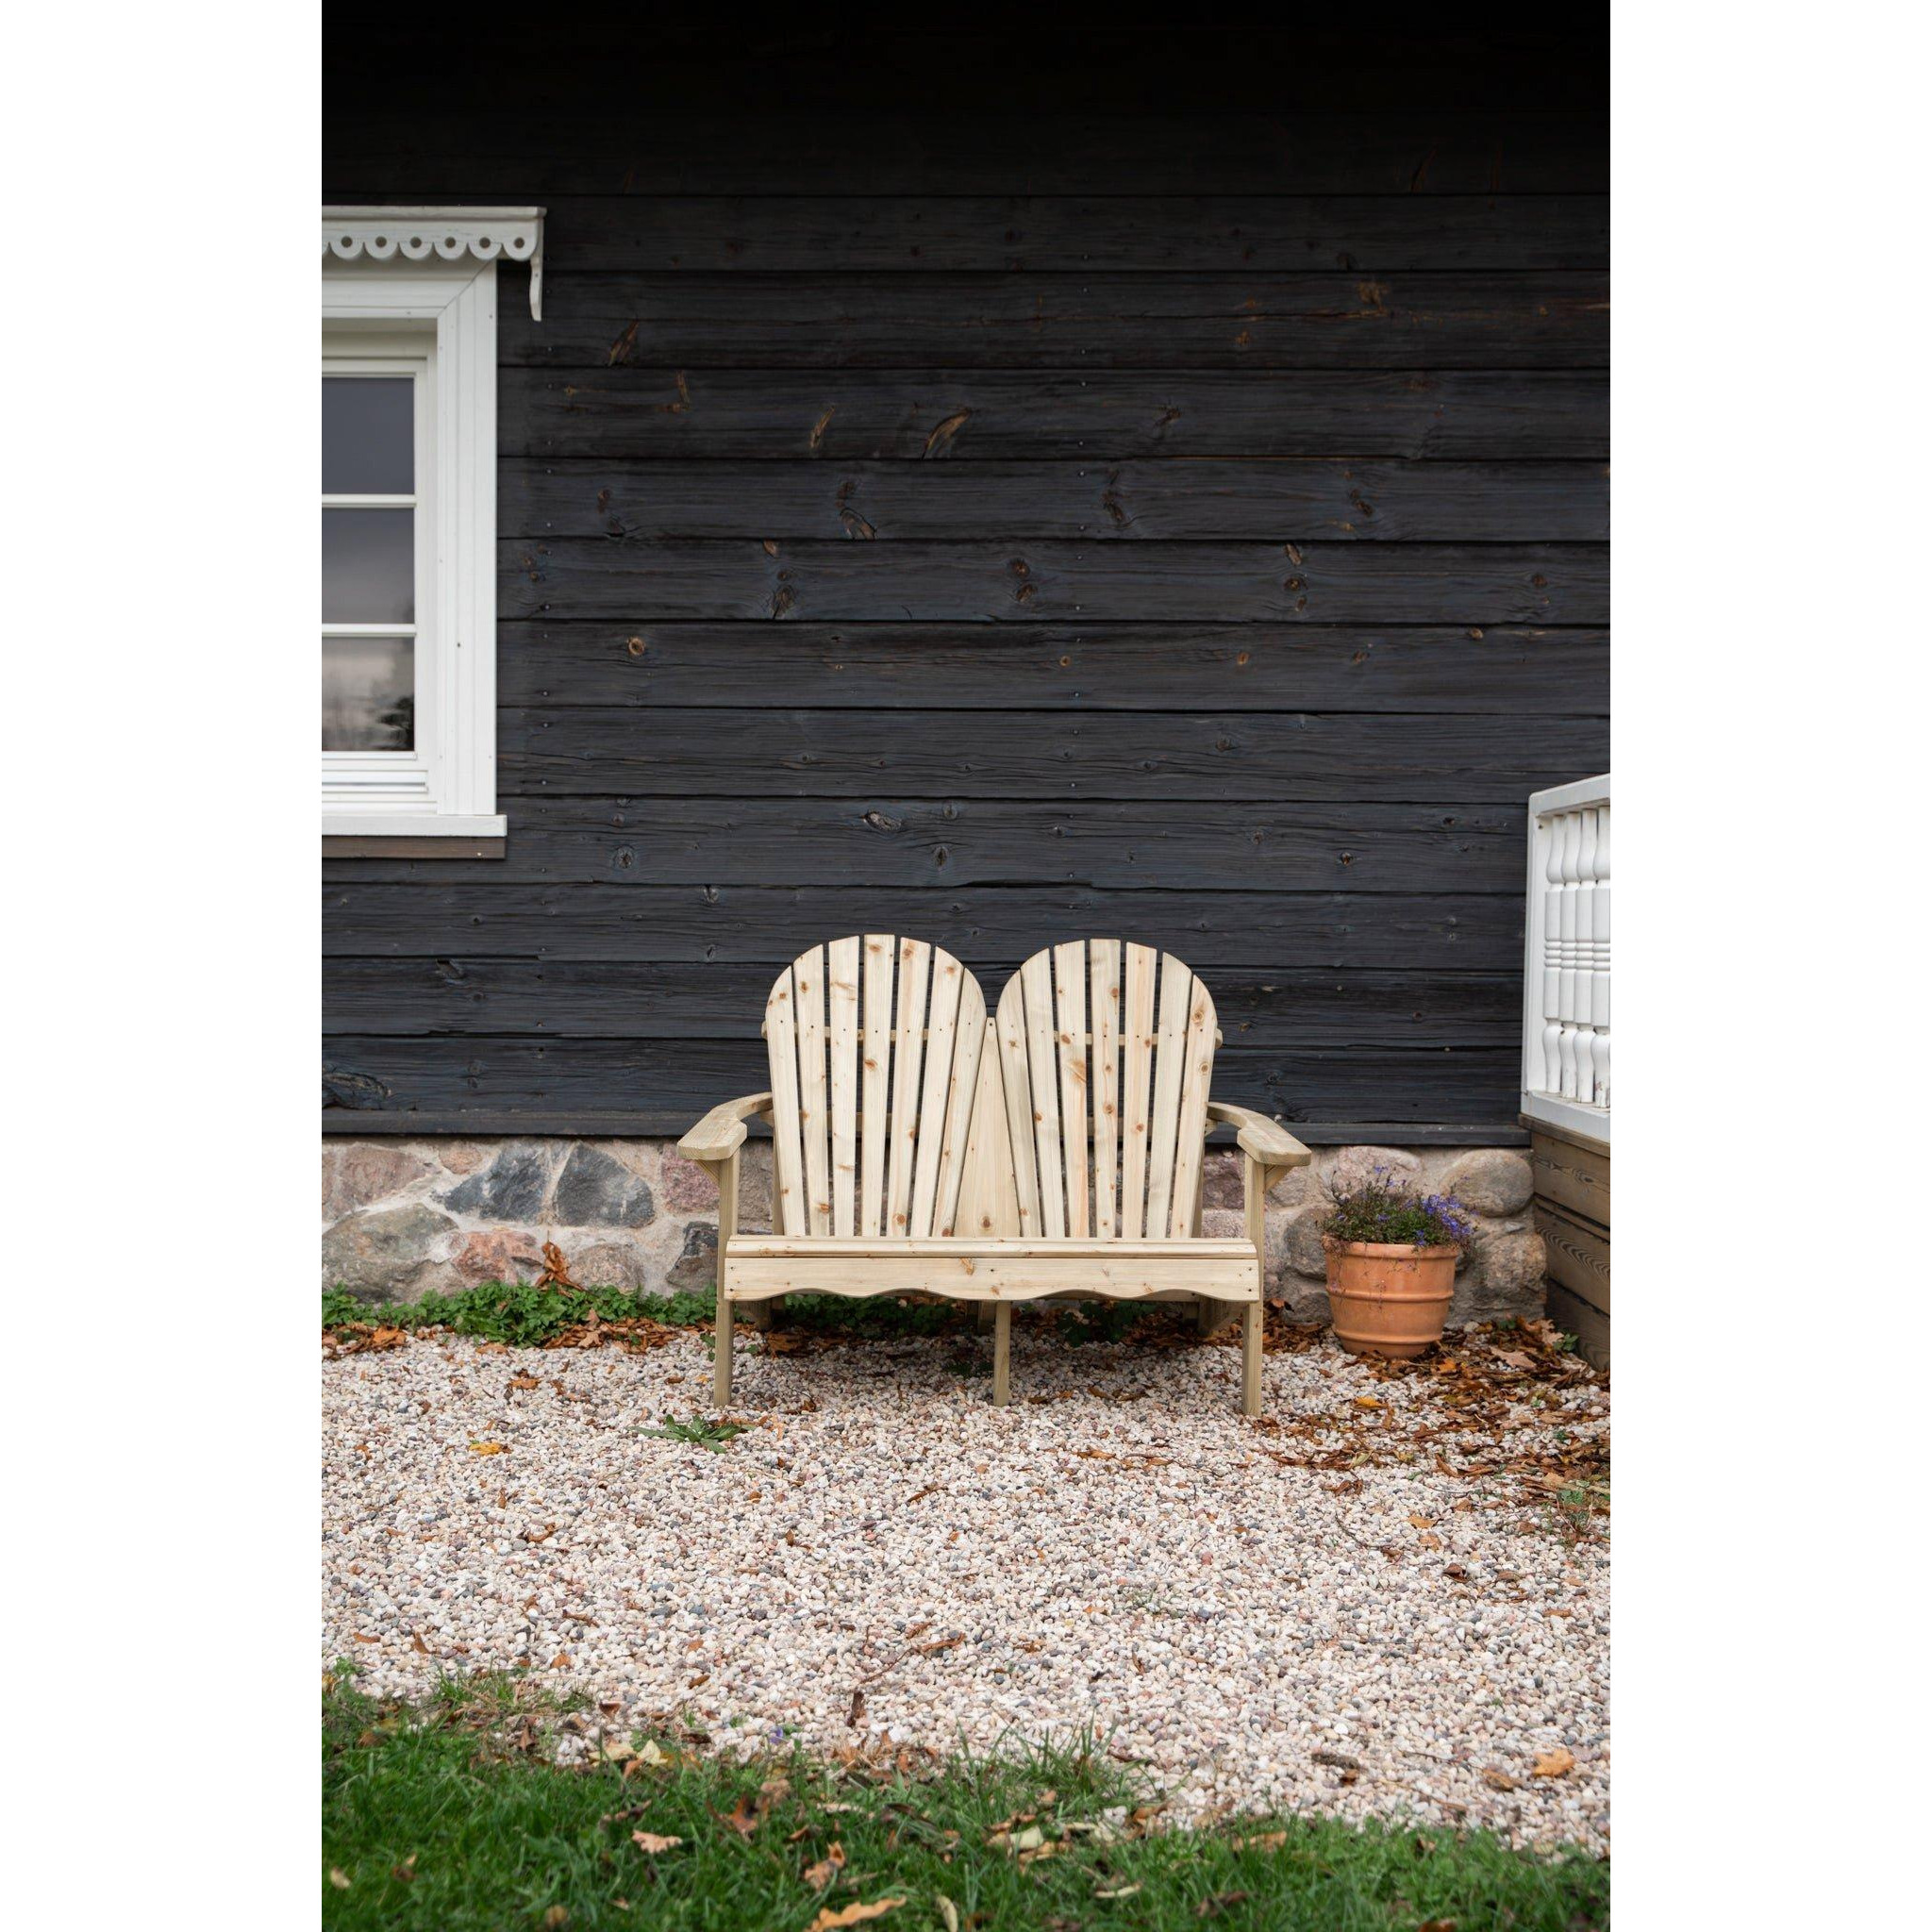 Double Adirondack relax garden bench - image 1